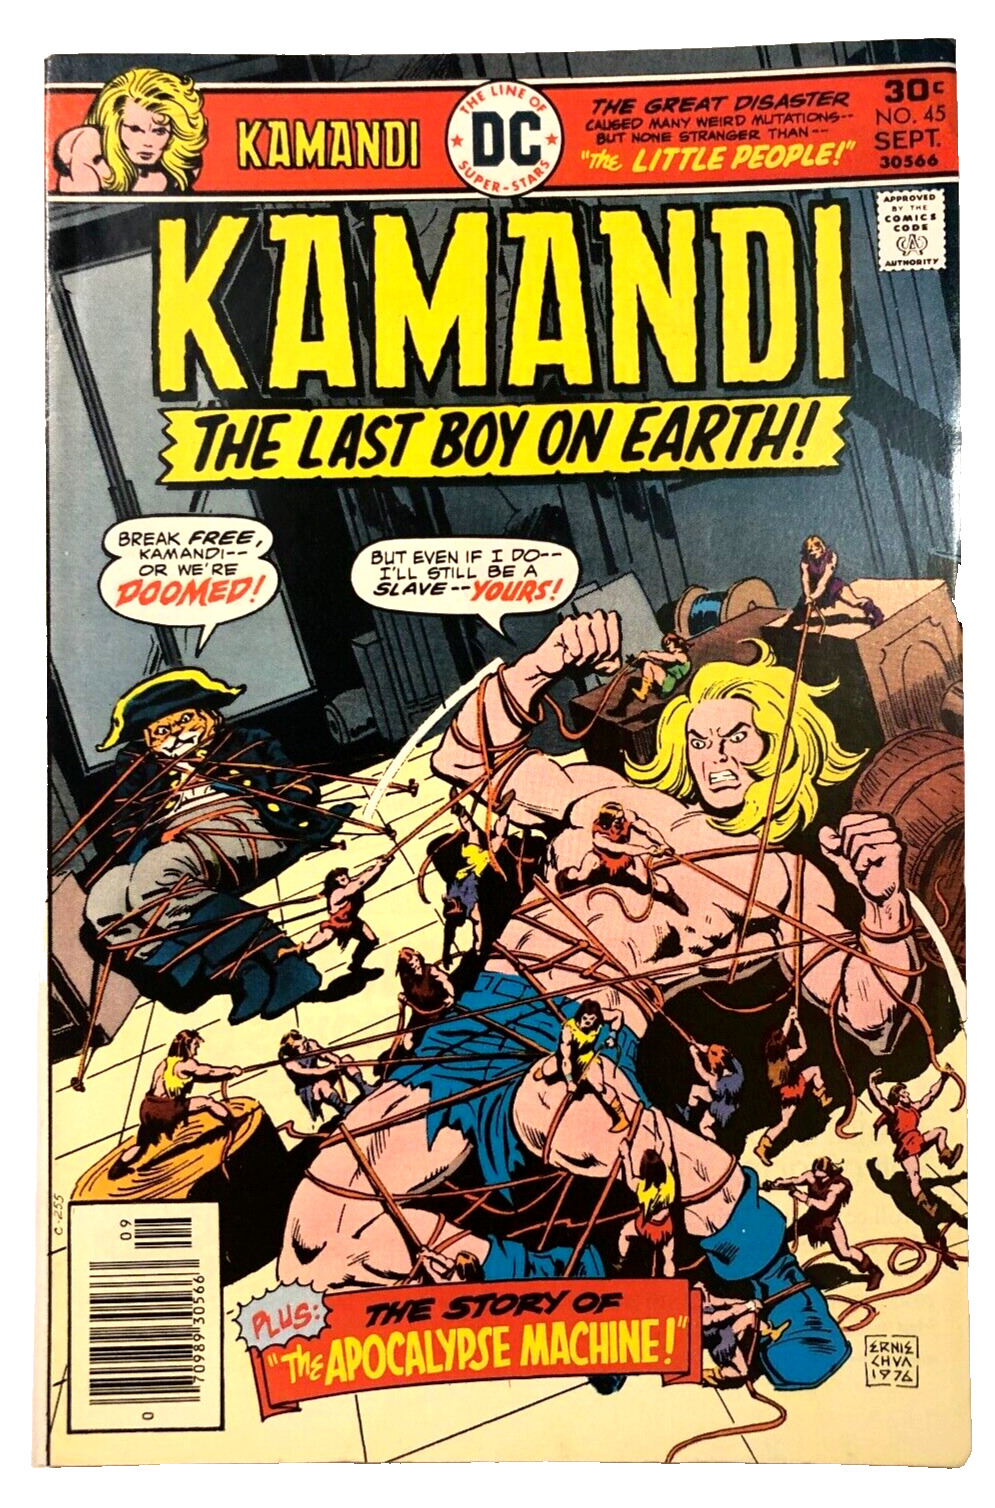 DC Comic Kamandi The Last Boy on Earth #45 September 1976 Vintage Original